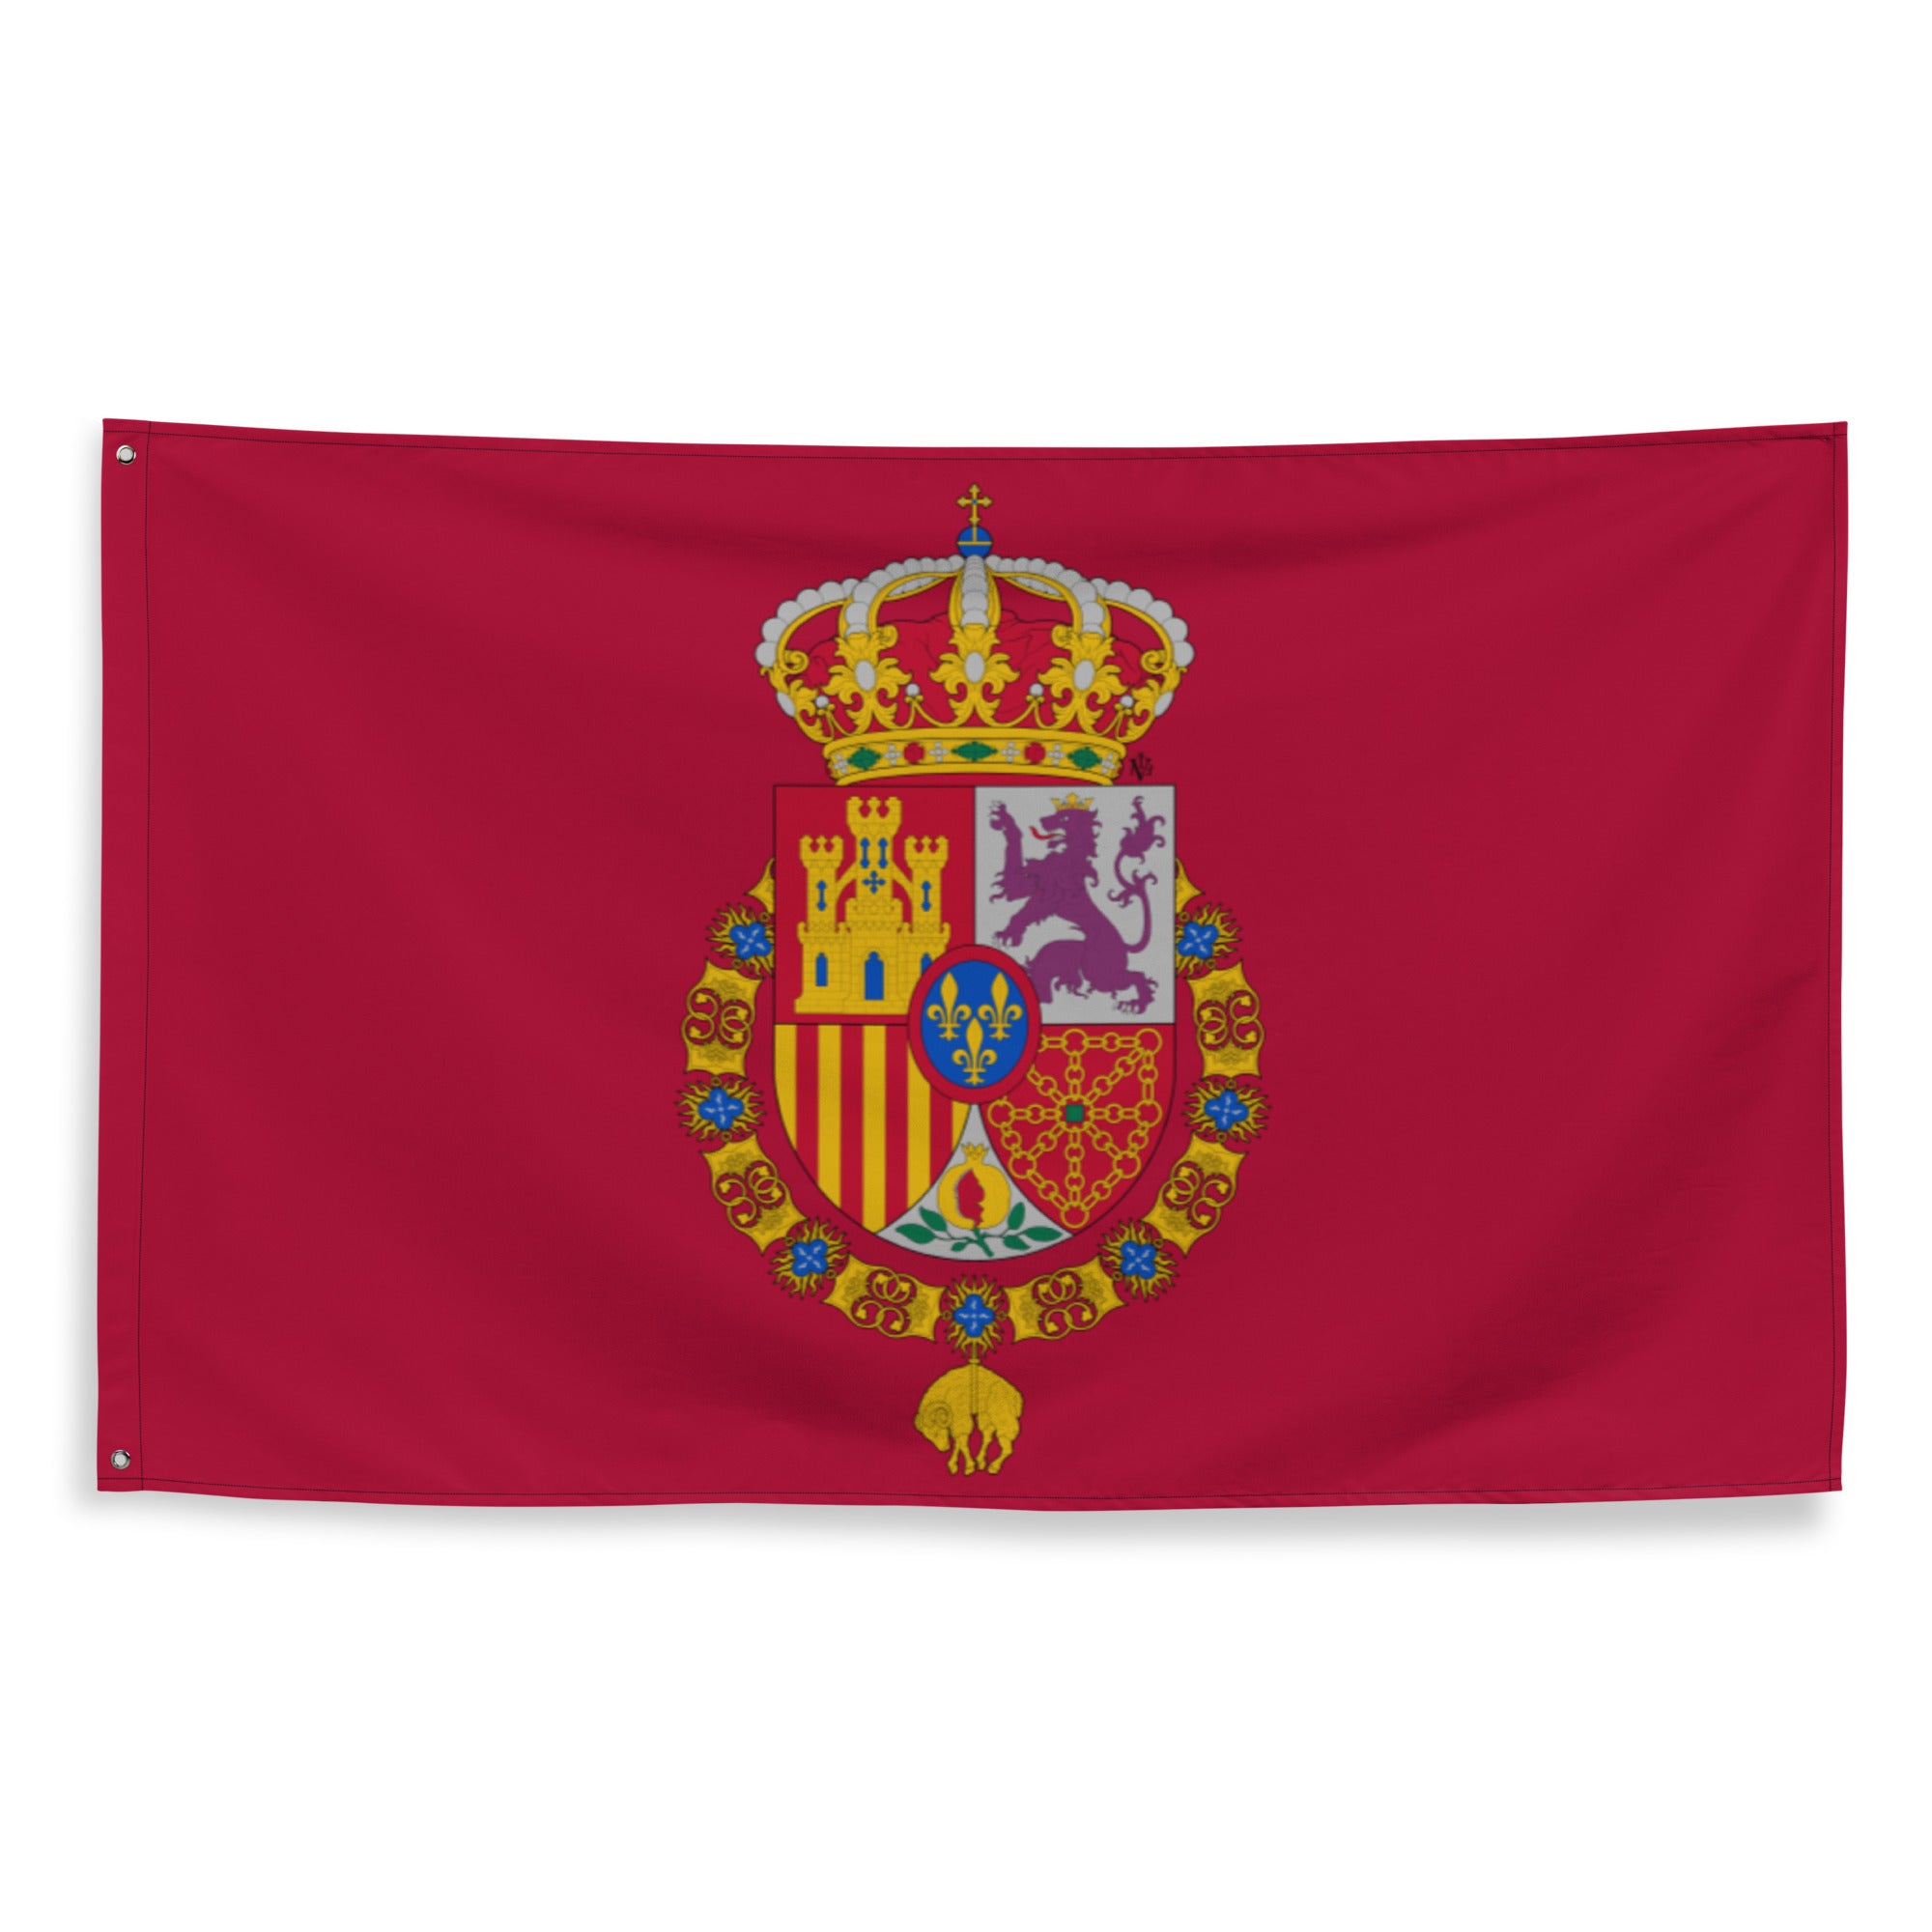 Bandeira Real (Bourbons d.2014)